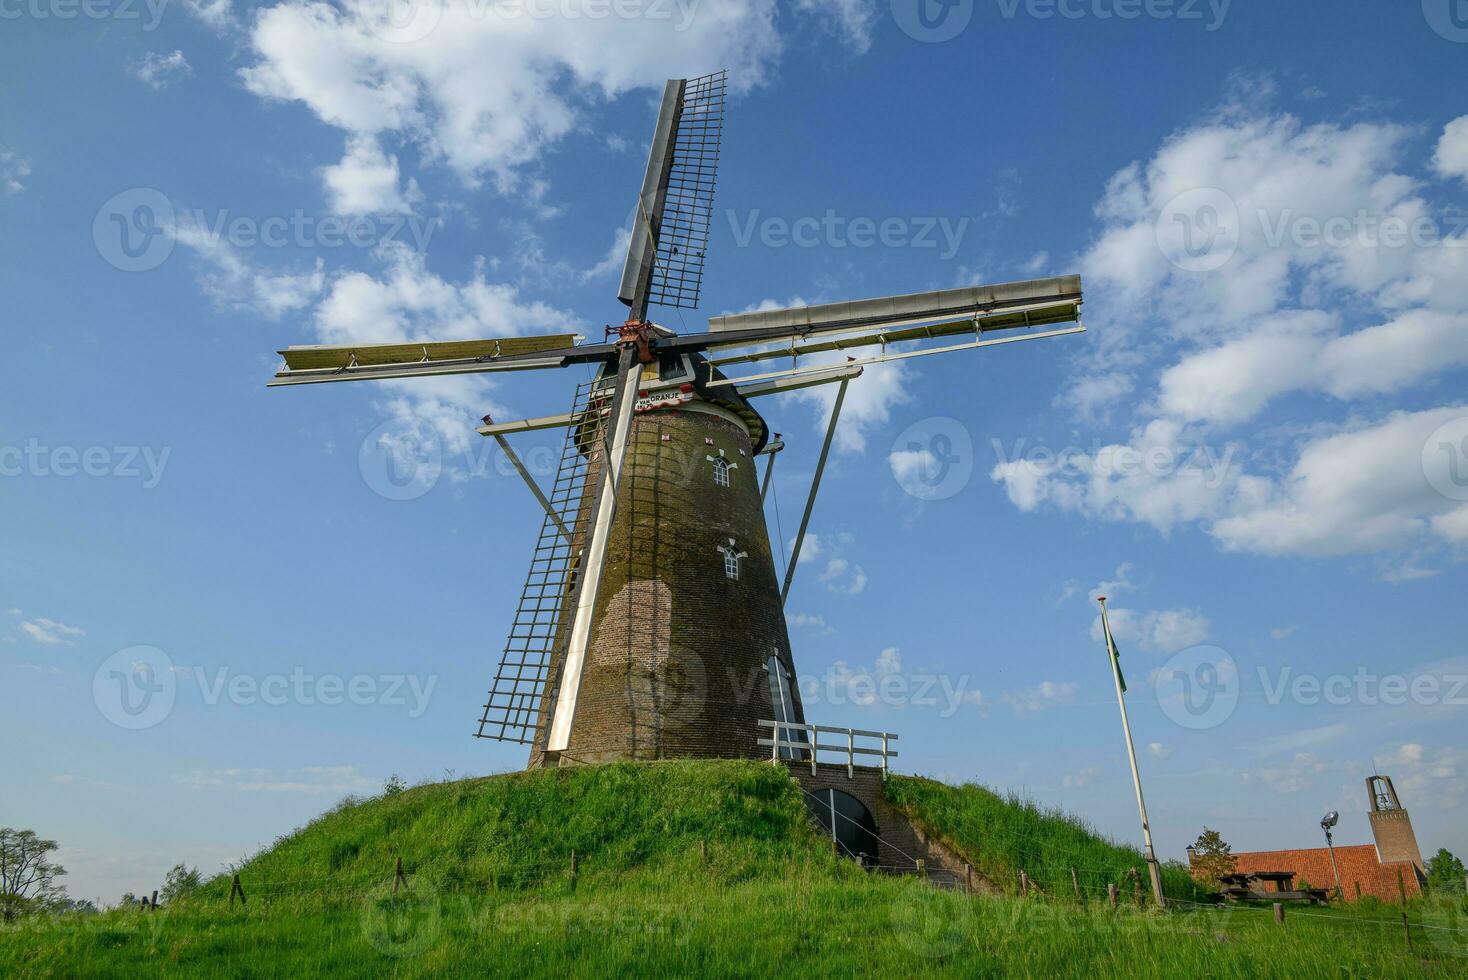 Bredevoort city in the netherlands photo